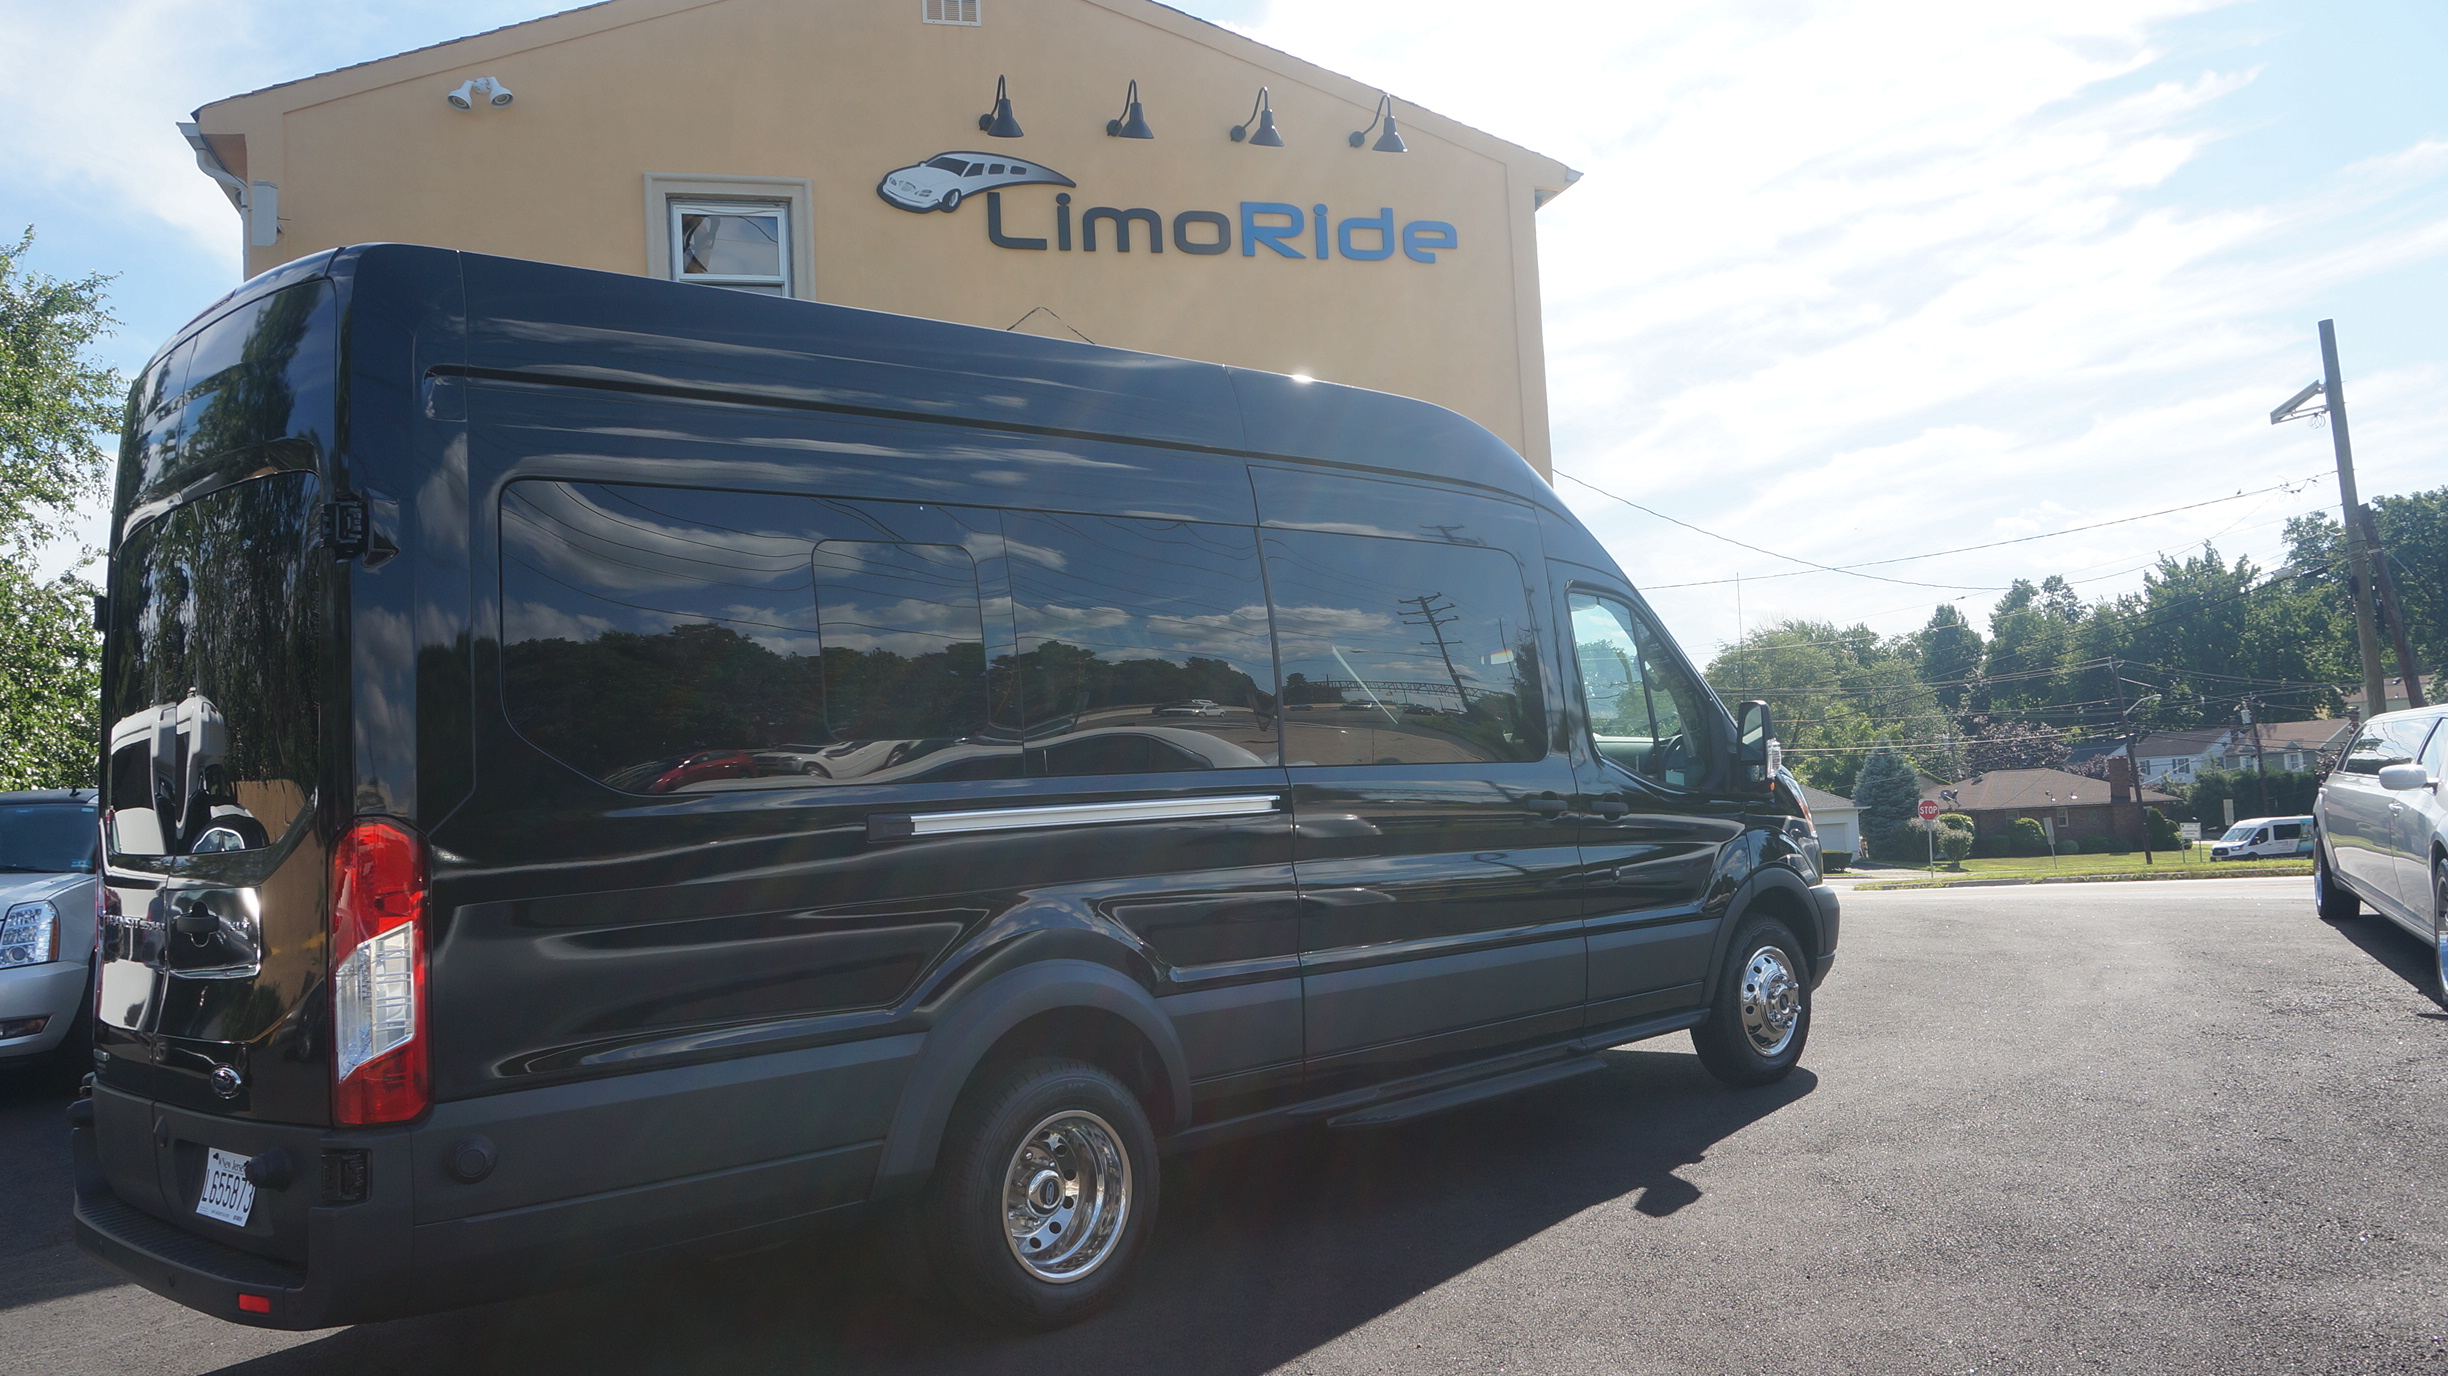 14 Passenger Ford Transit - Majestic Transportation Services & Limo, Inc.